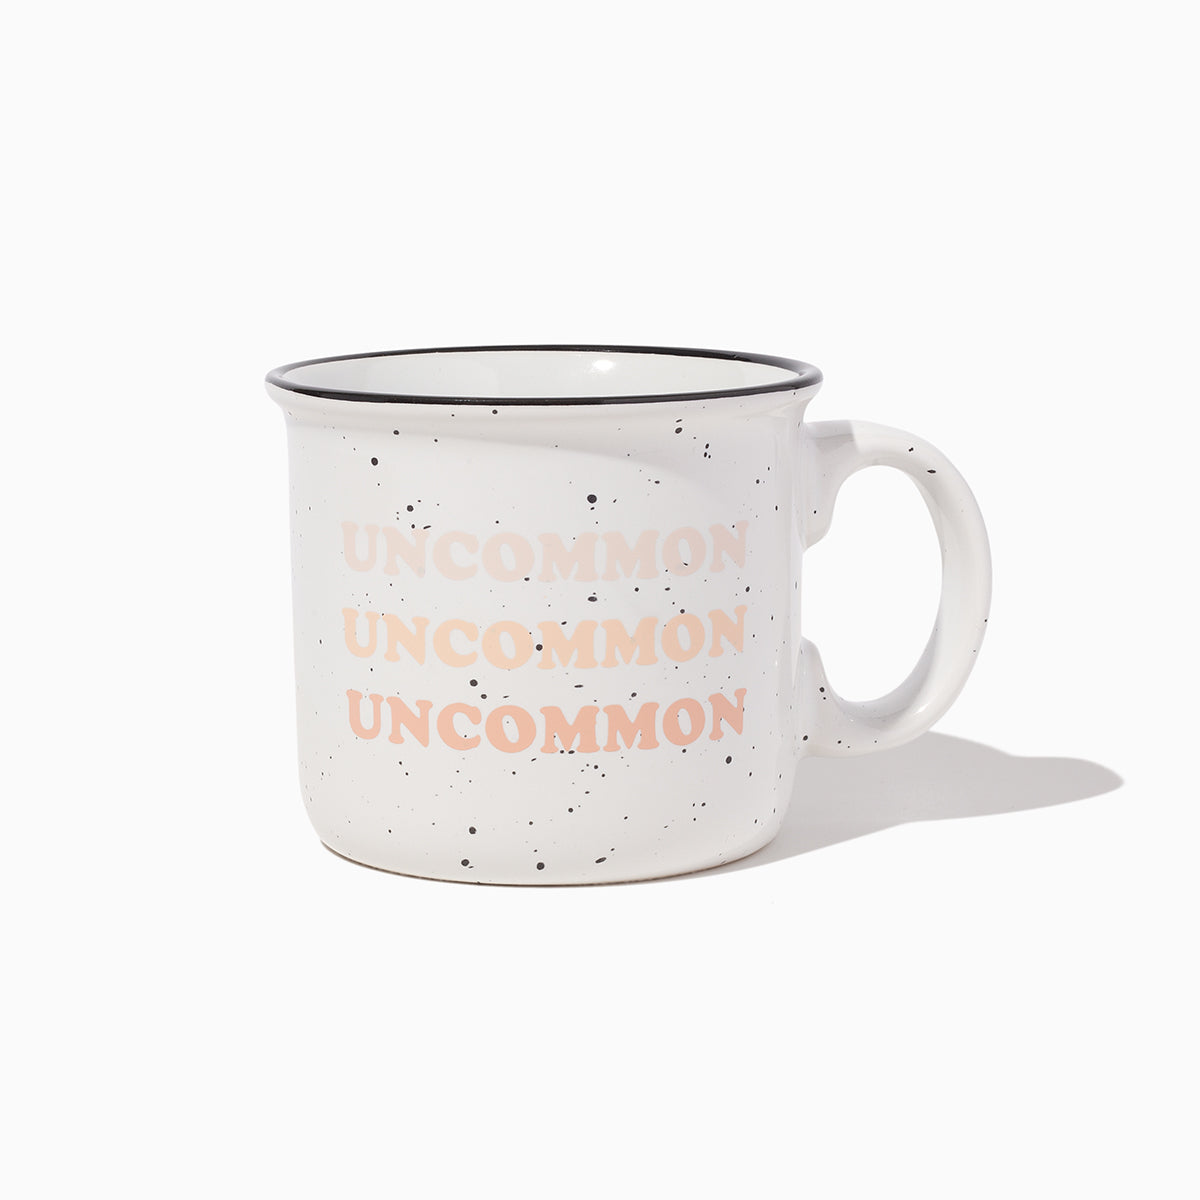 Uncommon Ombré Mug | White | Product Image | Uncommon James Home